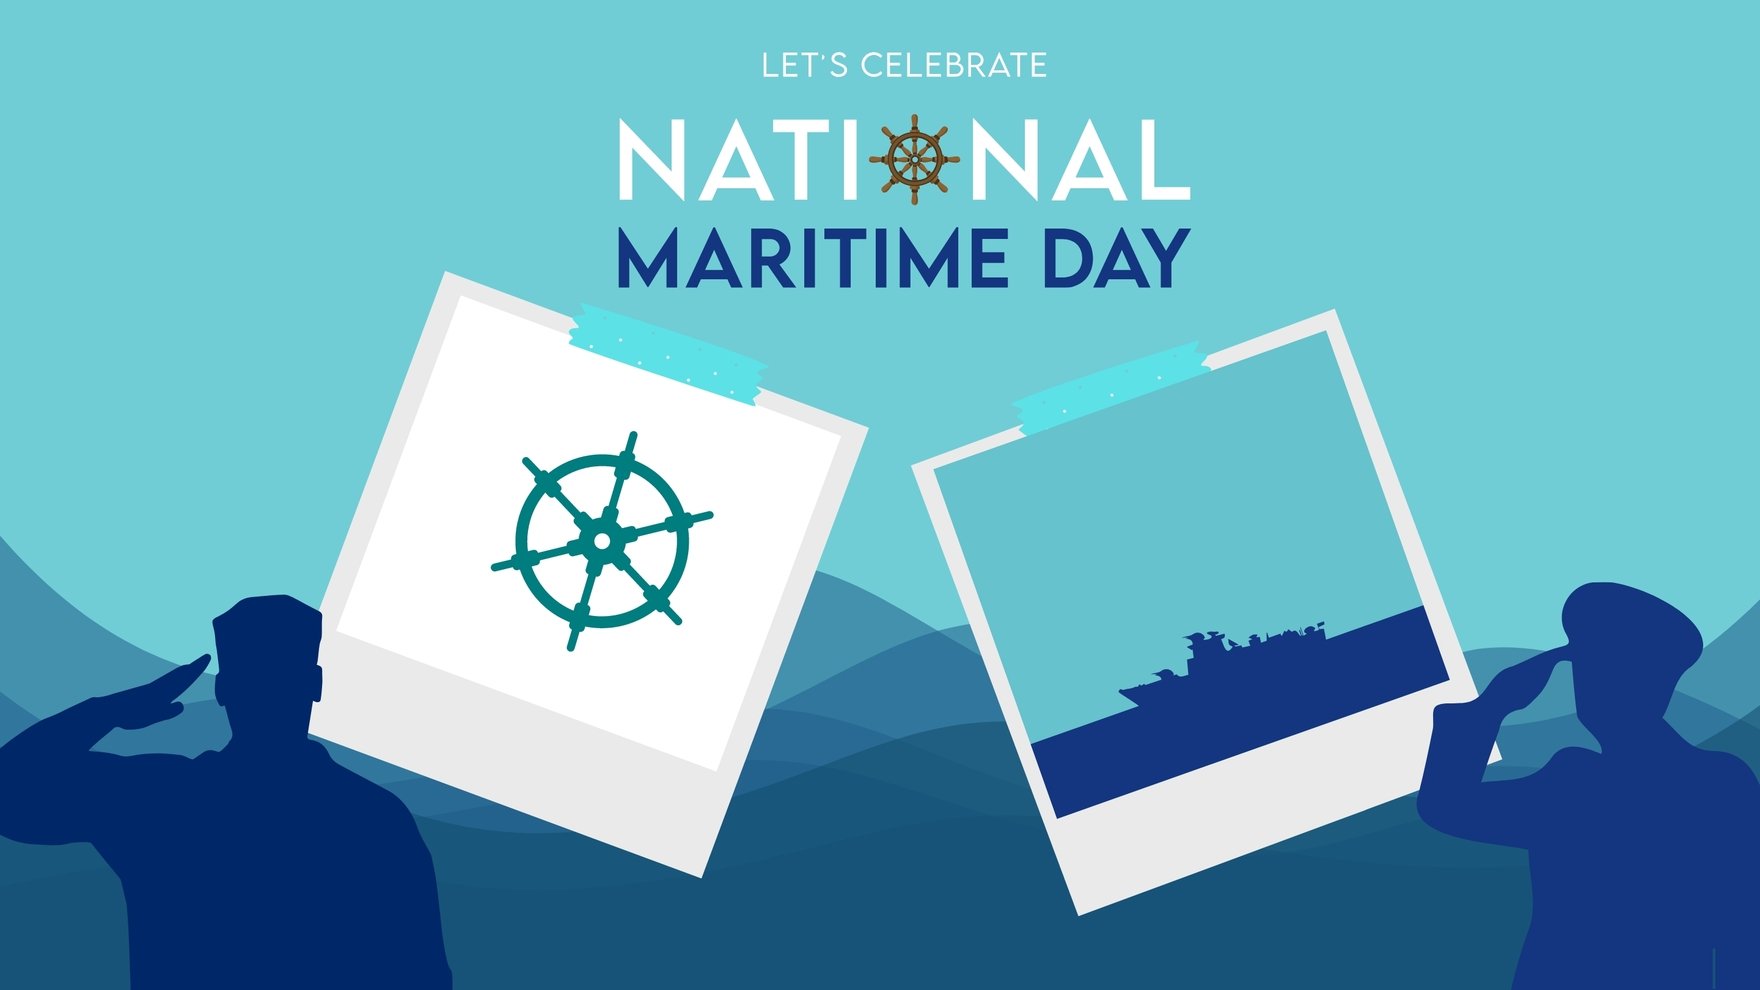 National Maritime Day Image Background